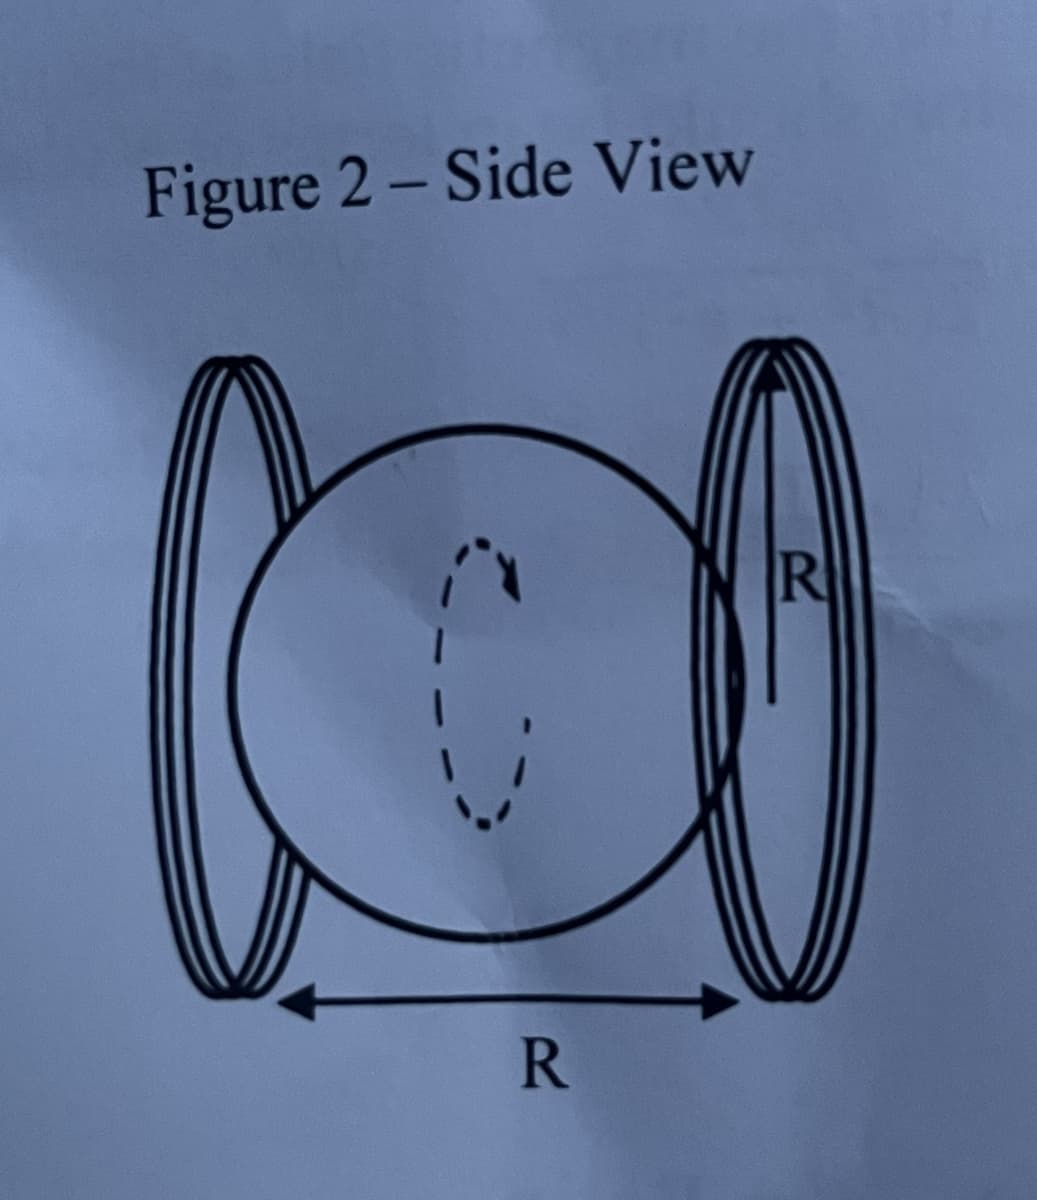 Figure 2 - Side View
R
R